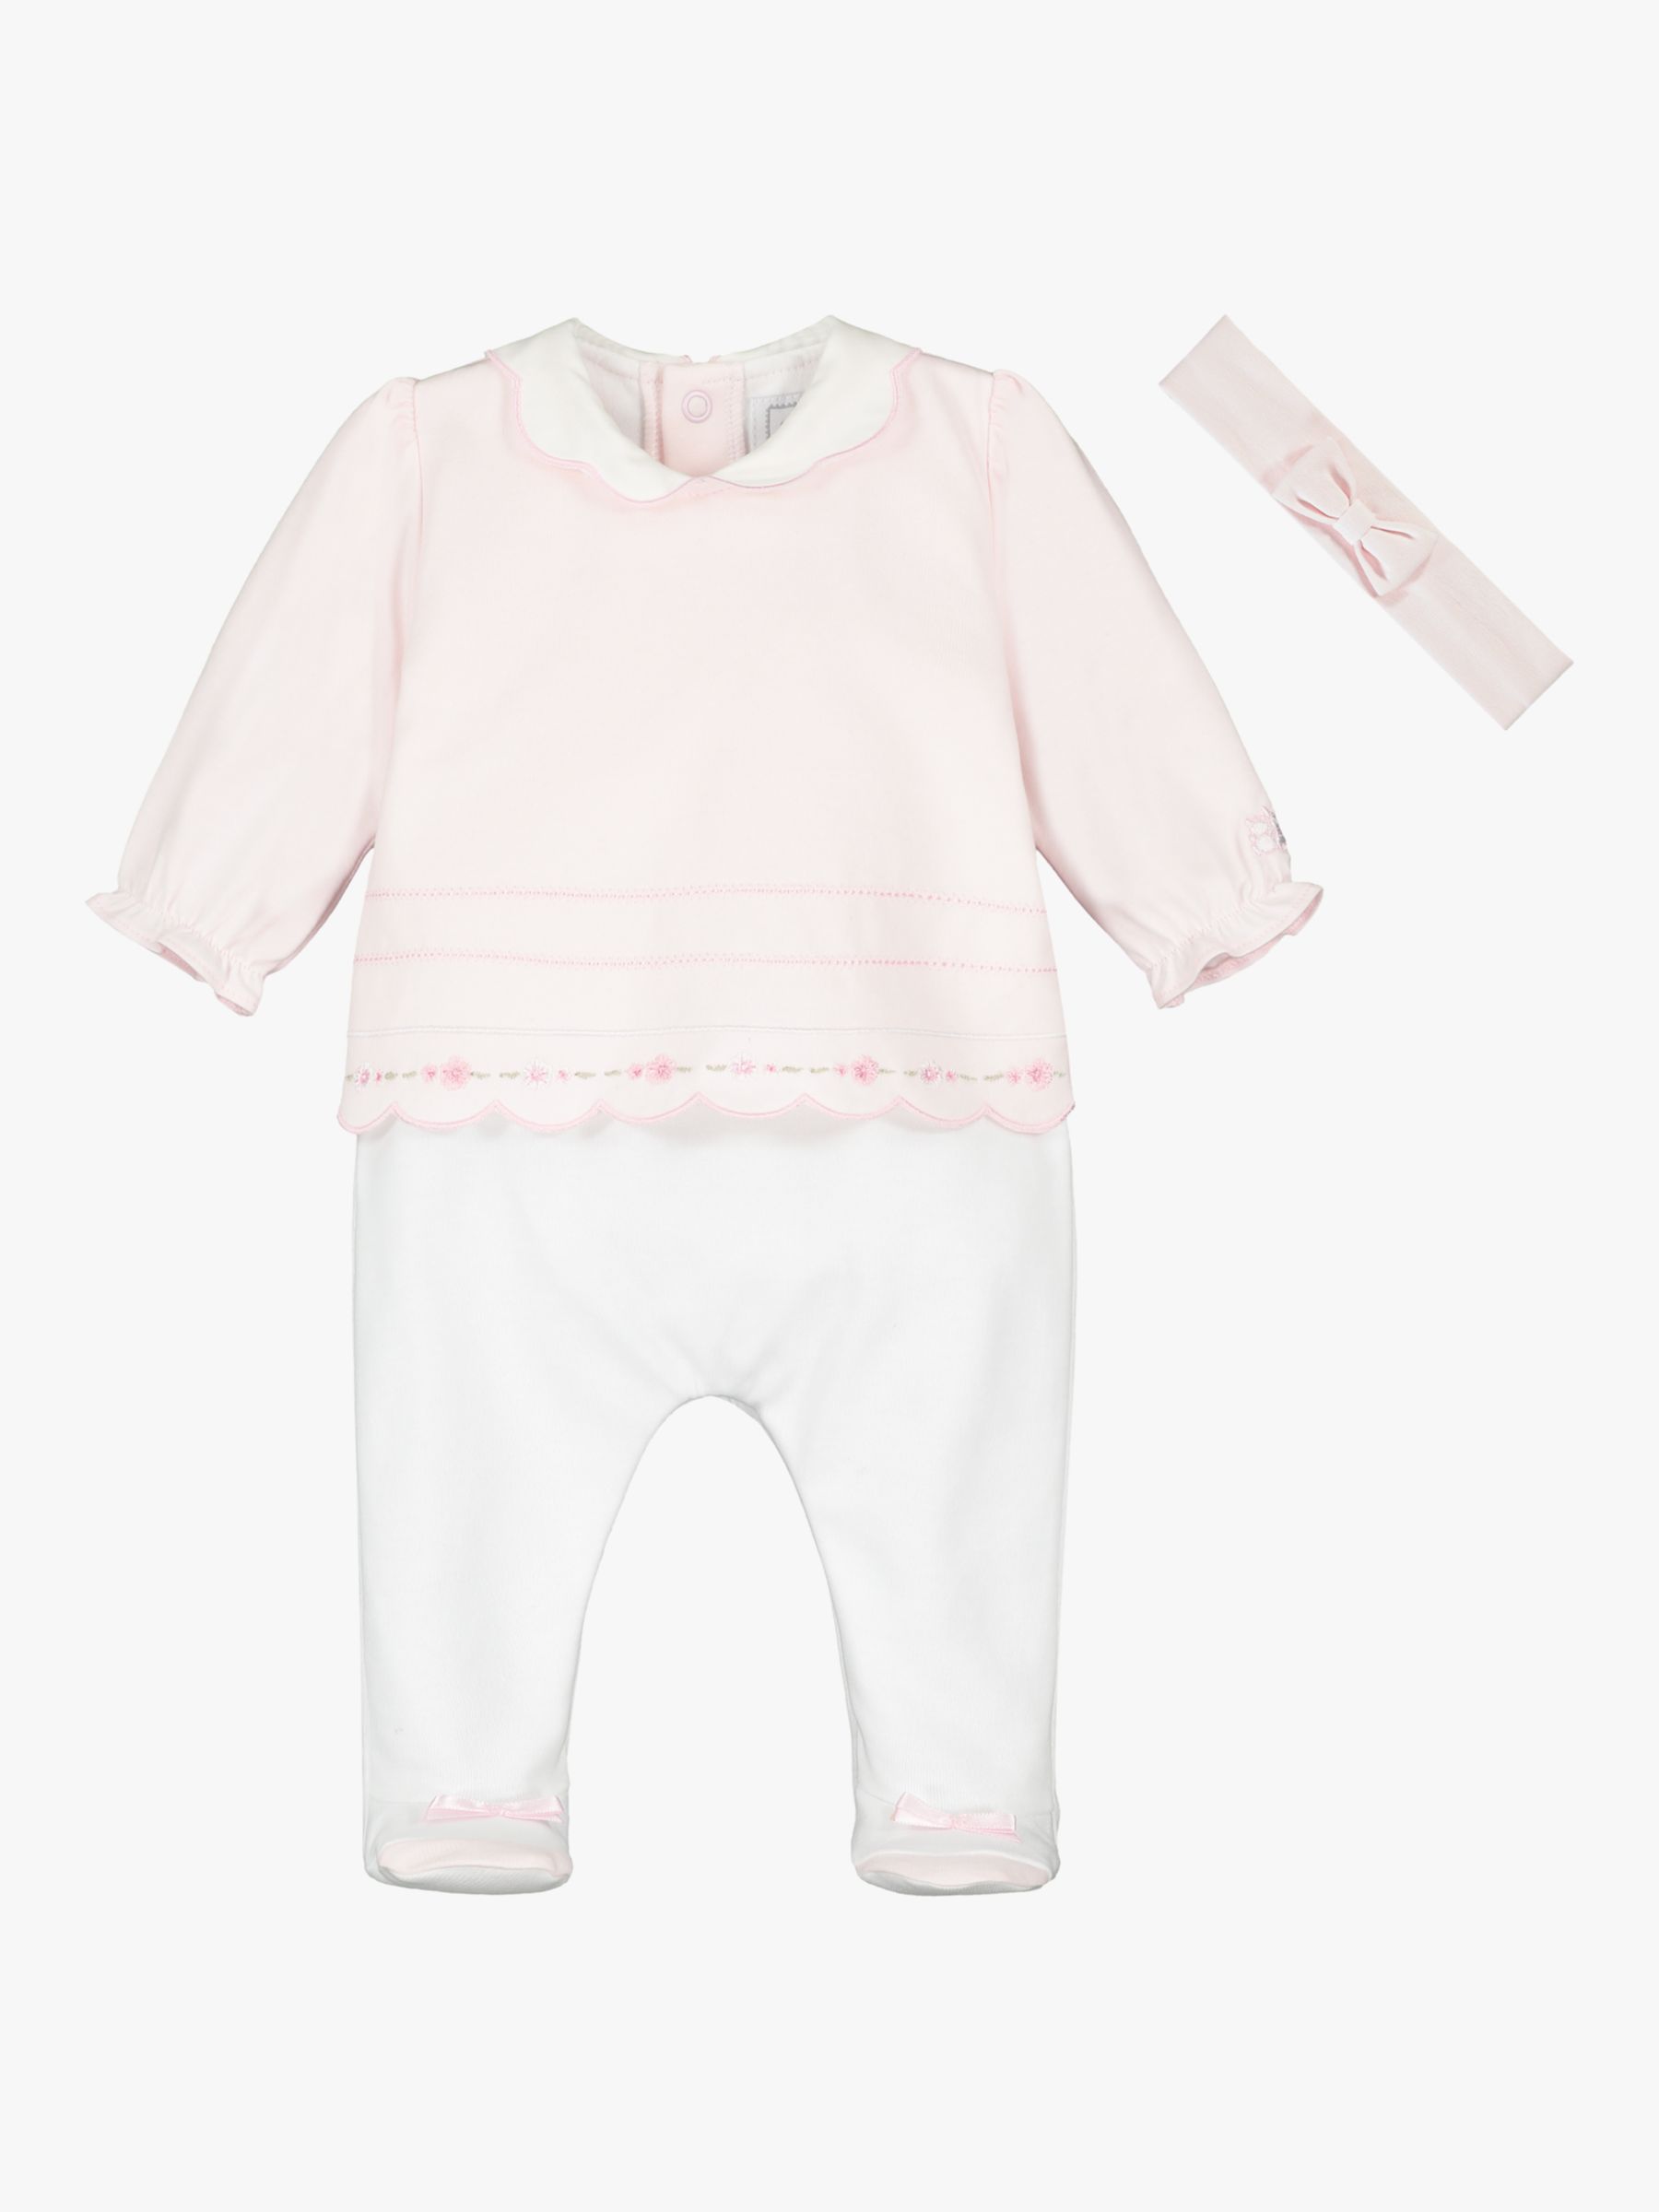 Emile et Rose Baby Betty Sleepsuit & Headband Set, Pale Pink, Newborn